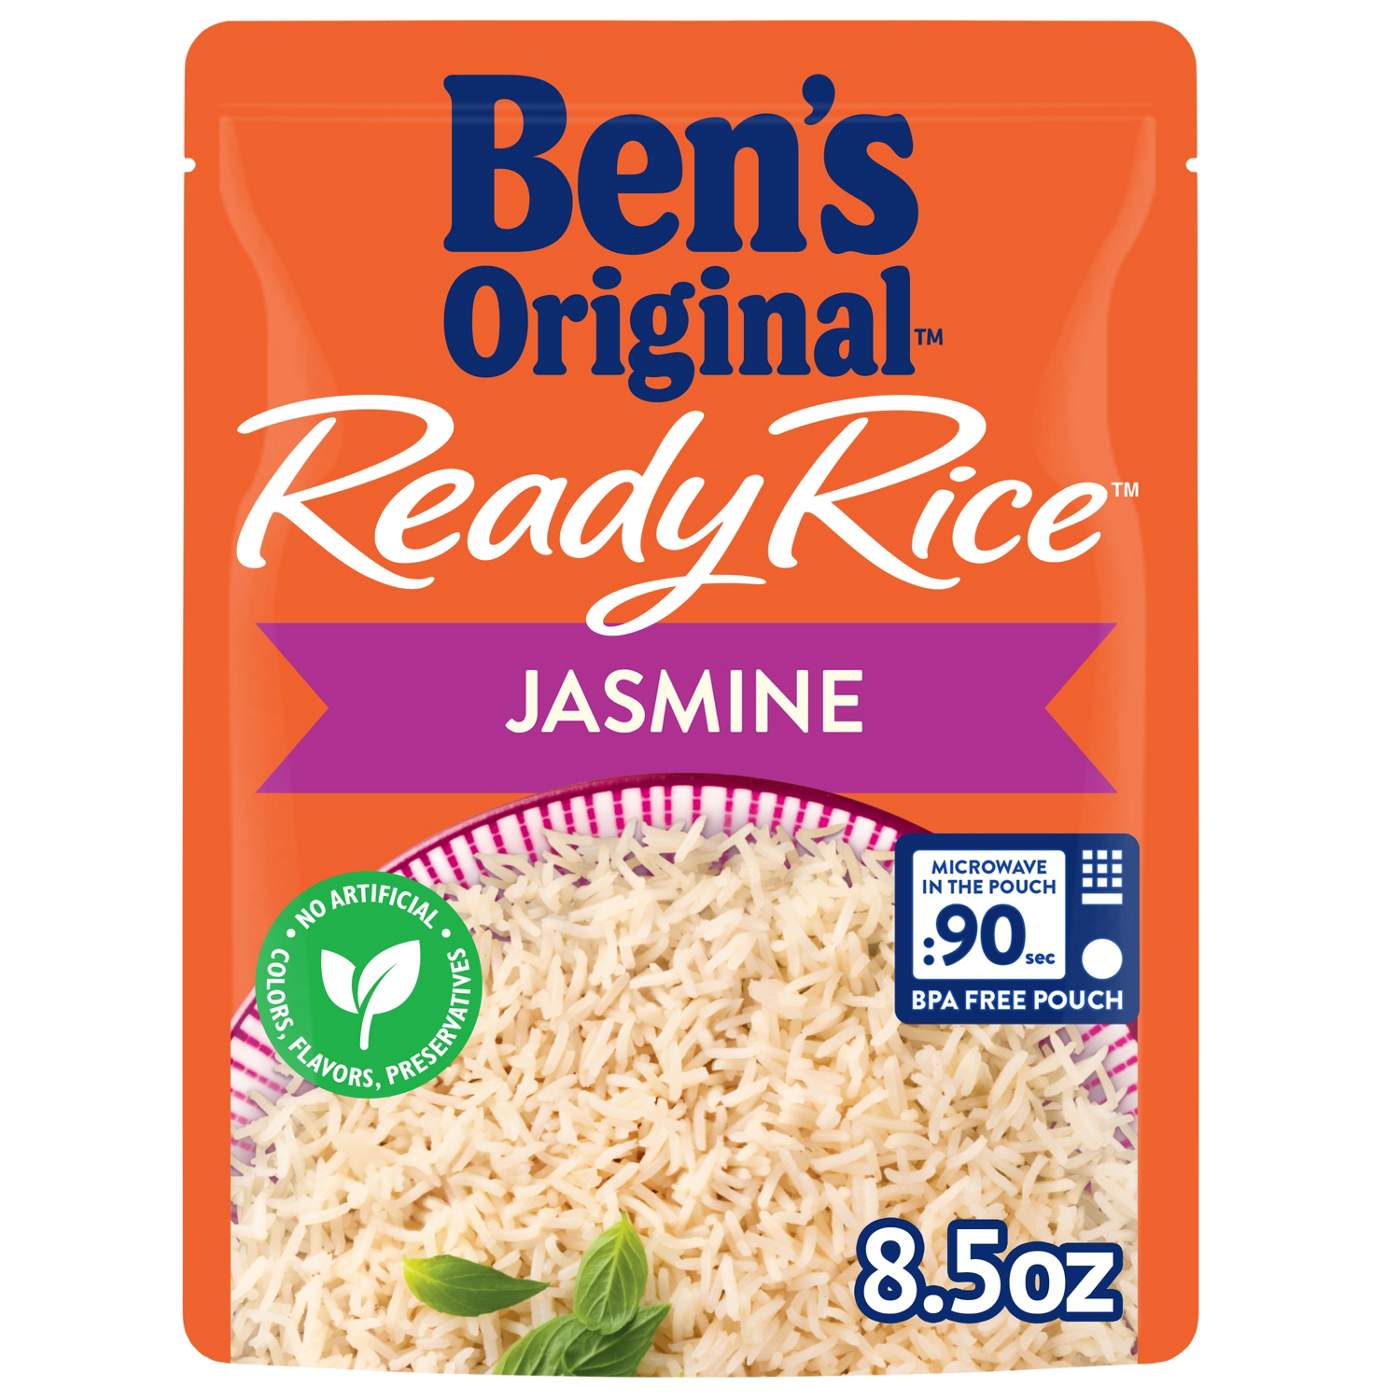 Ben's Original Ready Rice Jasmine Rice; image 1 of 2